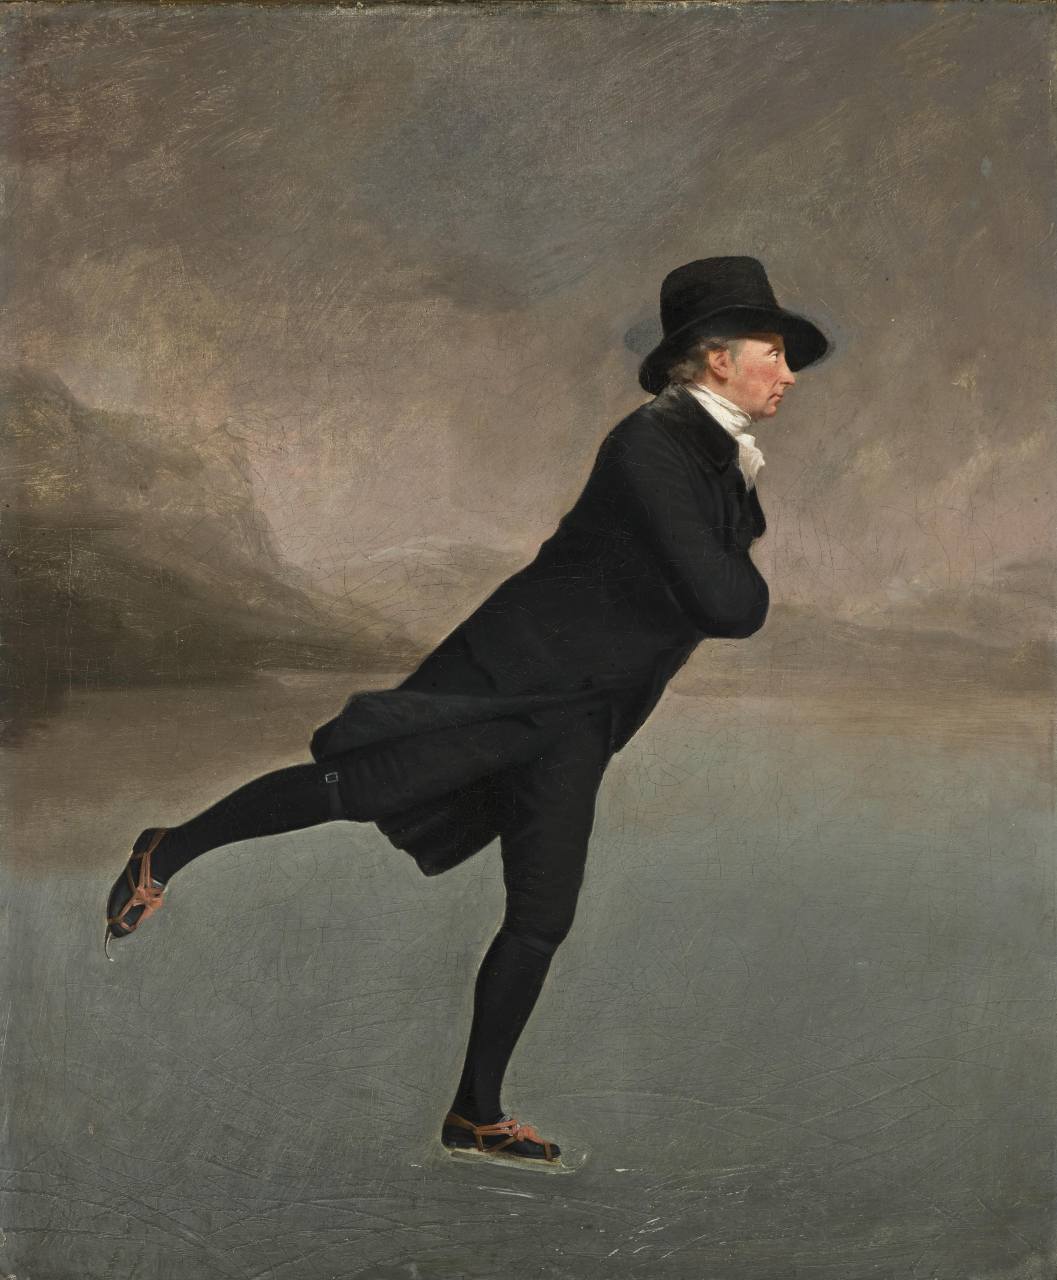 Image: The Skating Minister, Henry Raeburn. Credit: National Gallery of Scotland, Edinburgh, online collection